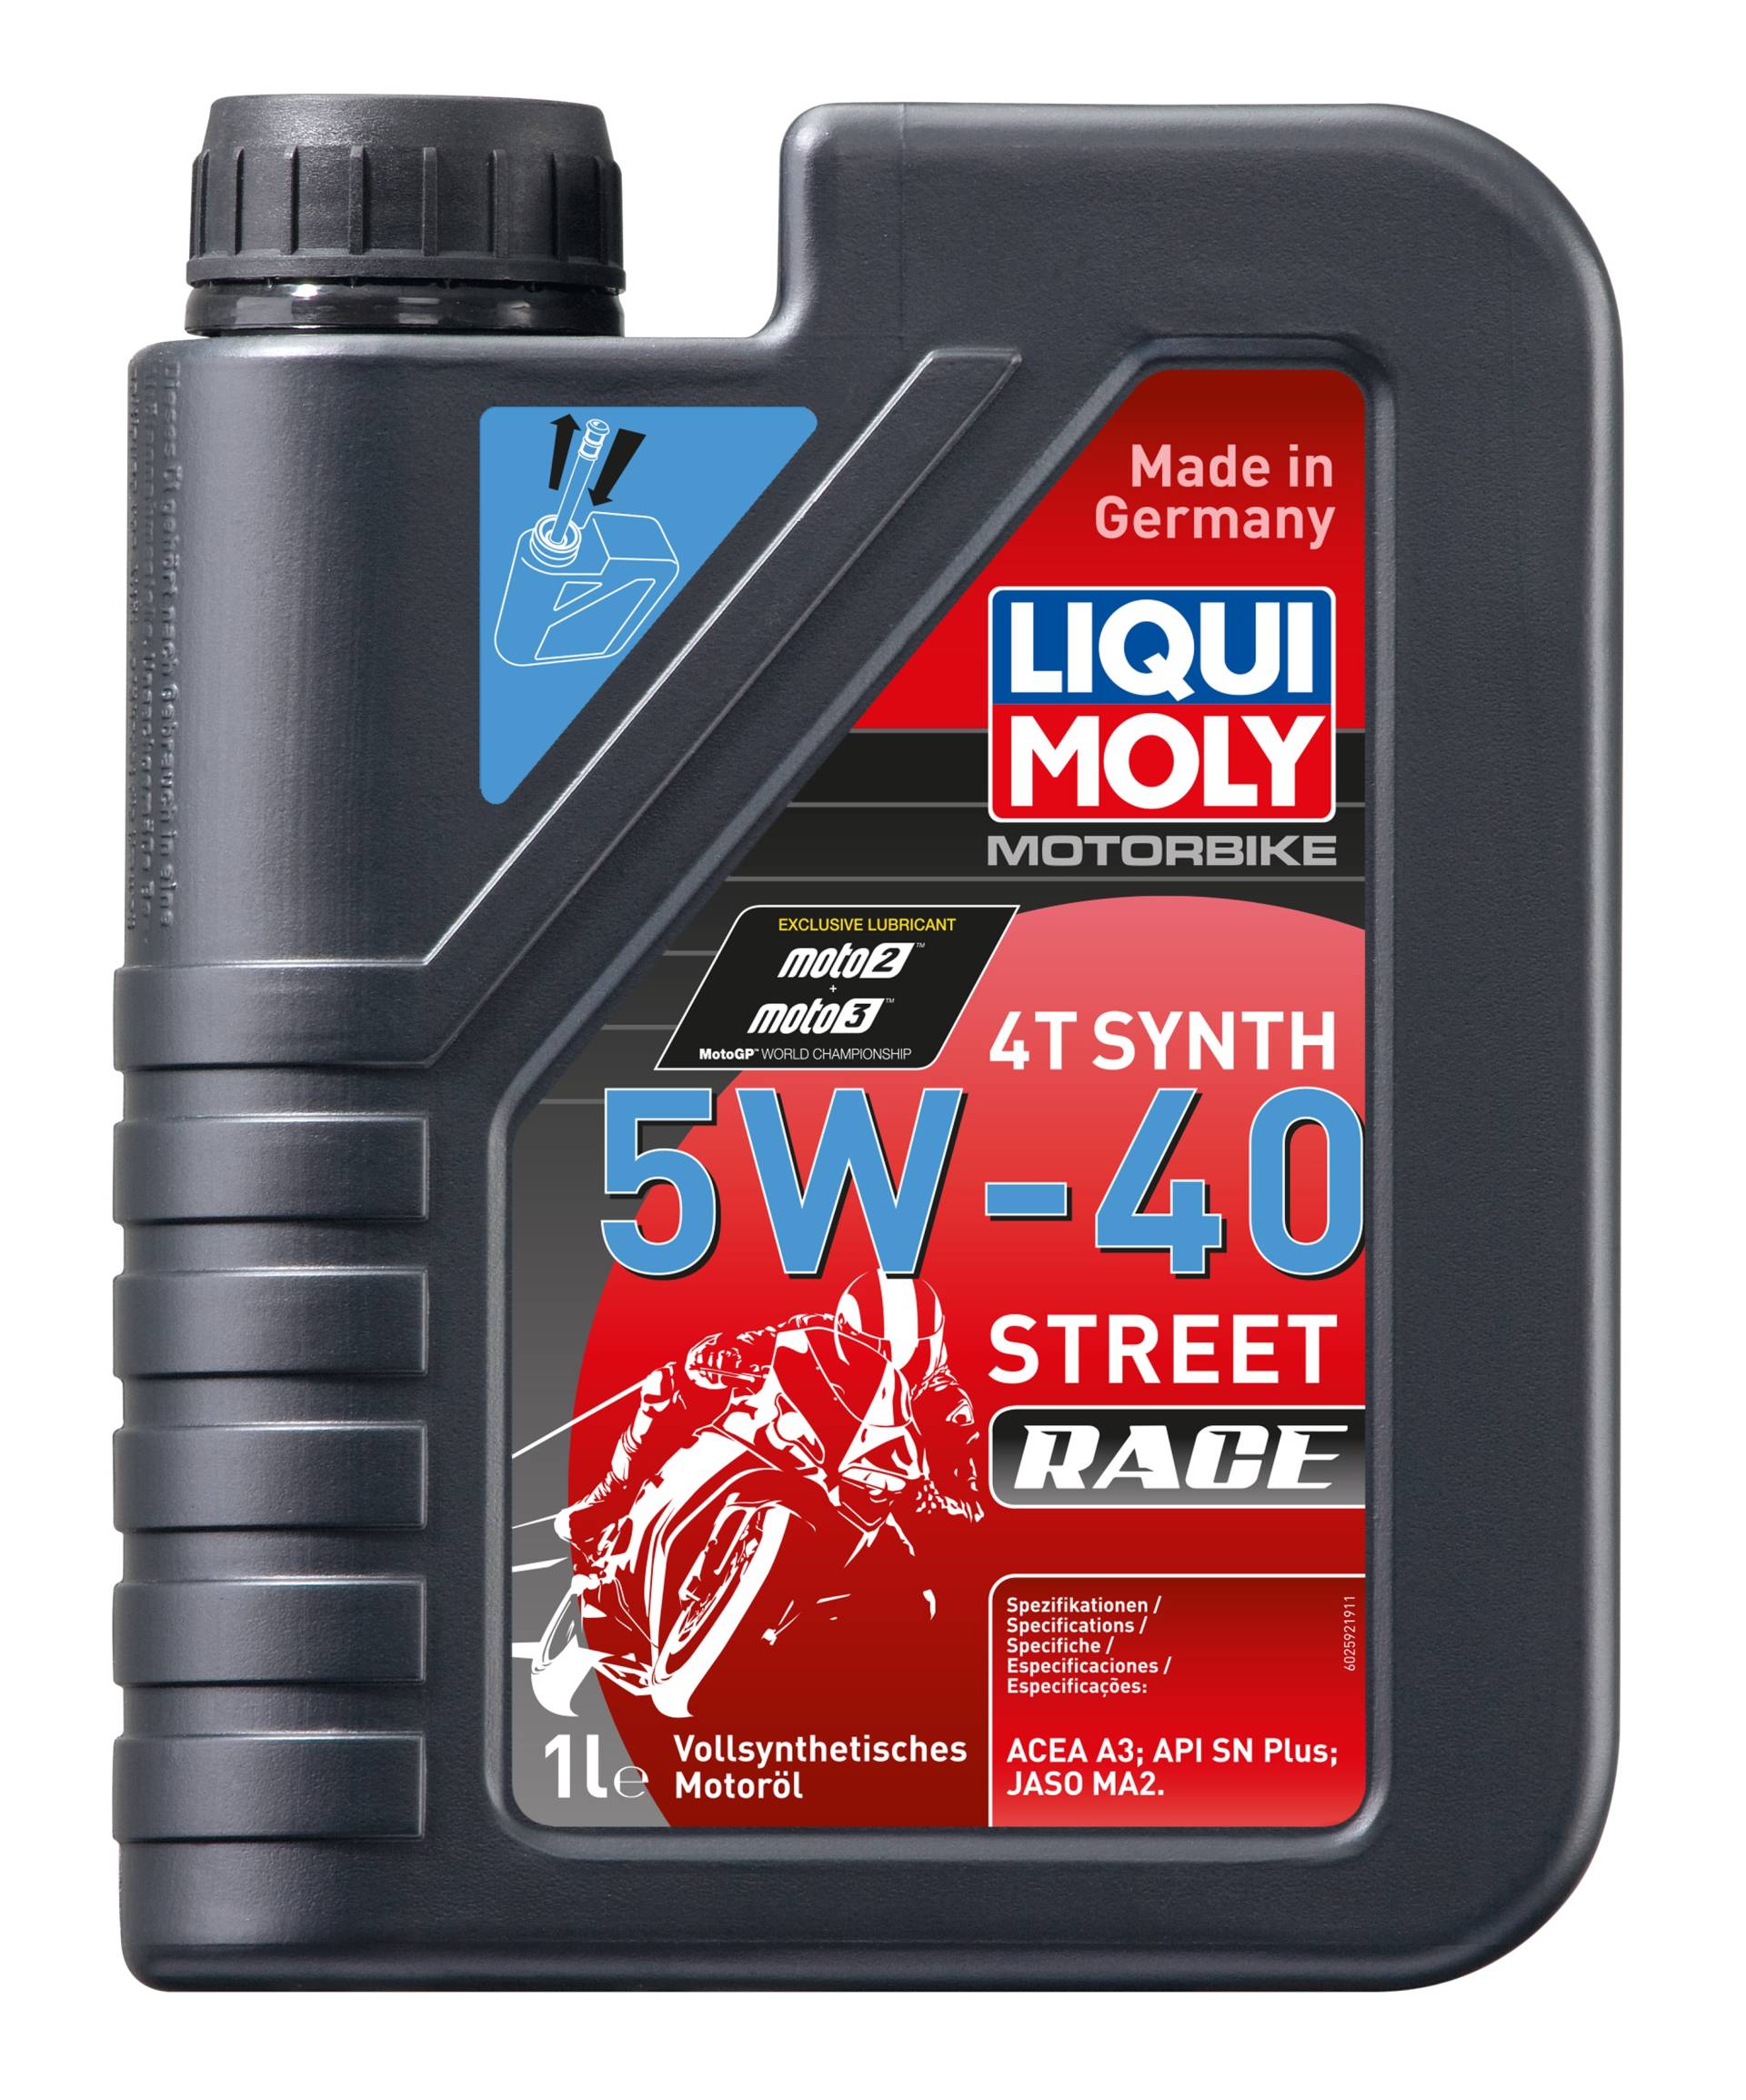 Liqui Moly Motorbike 4T Synth 5W-40 Street Race Motoröl, 1 l von Liqui Moly